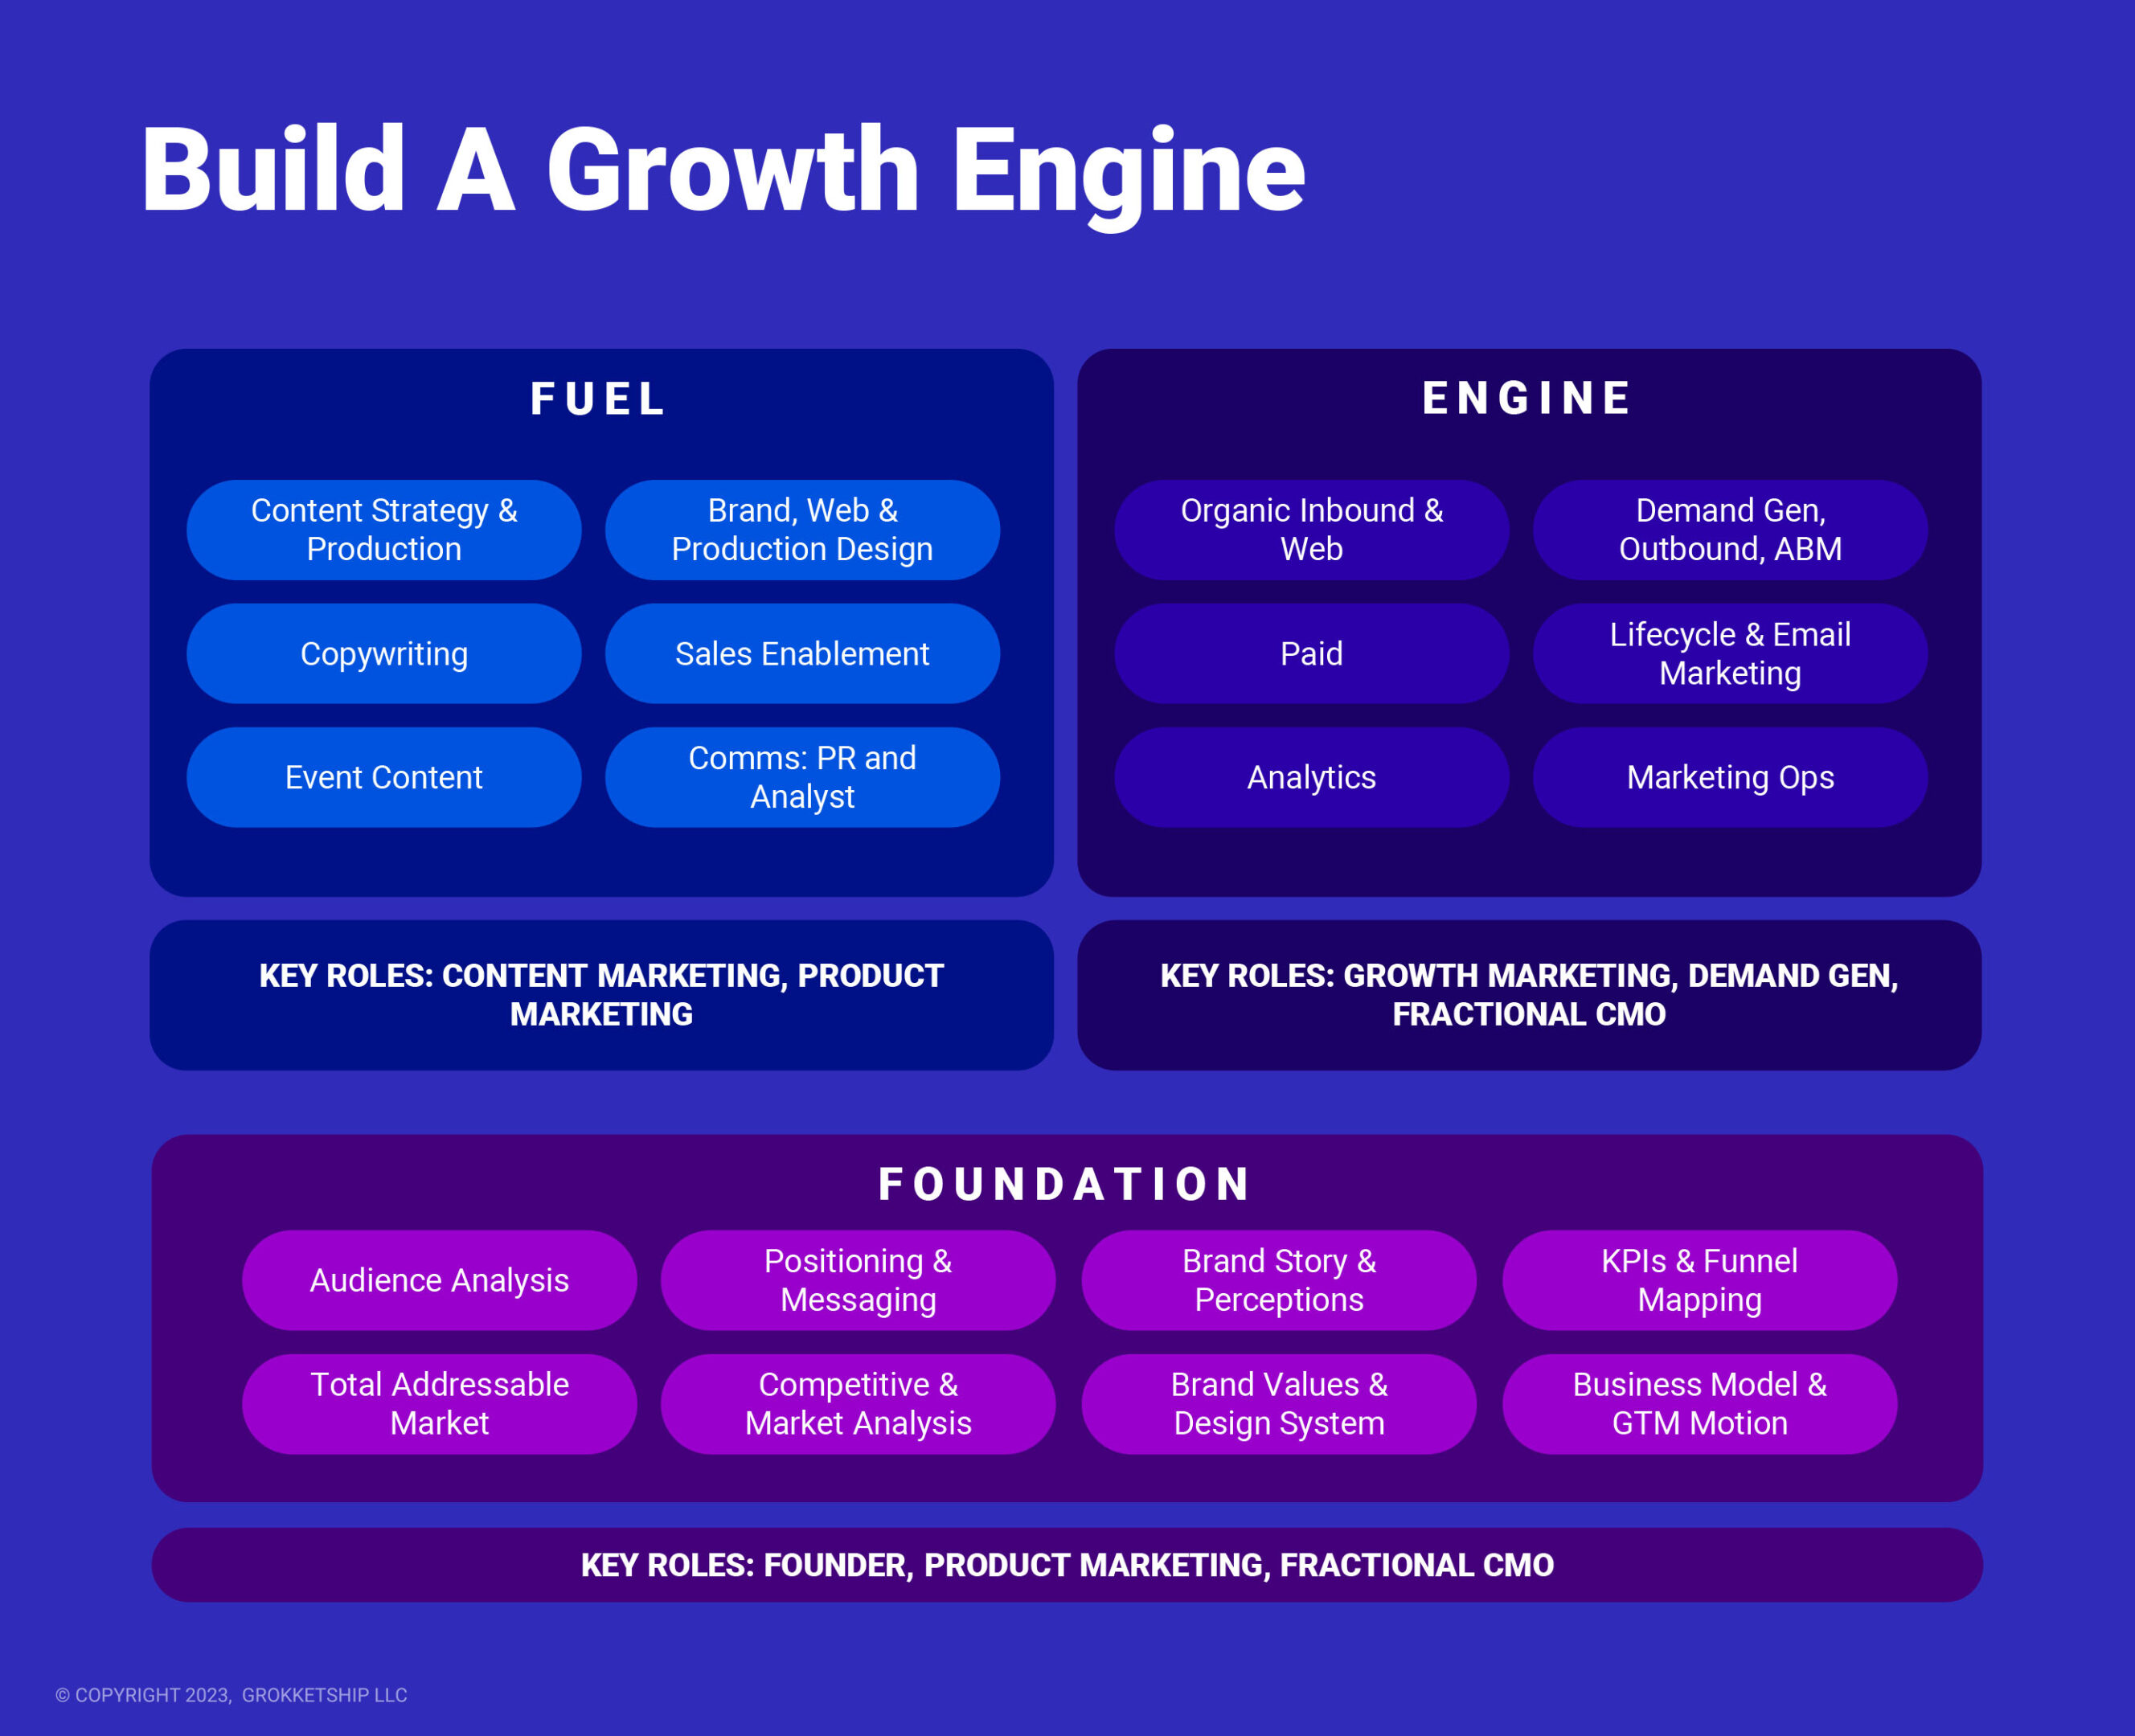 Build a Growth Engine